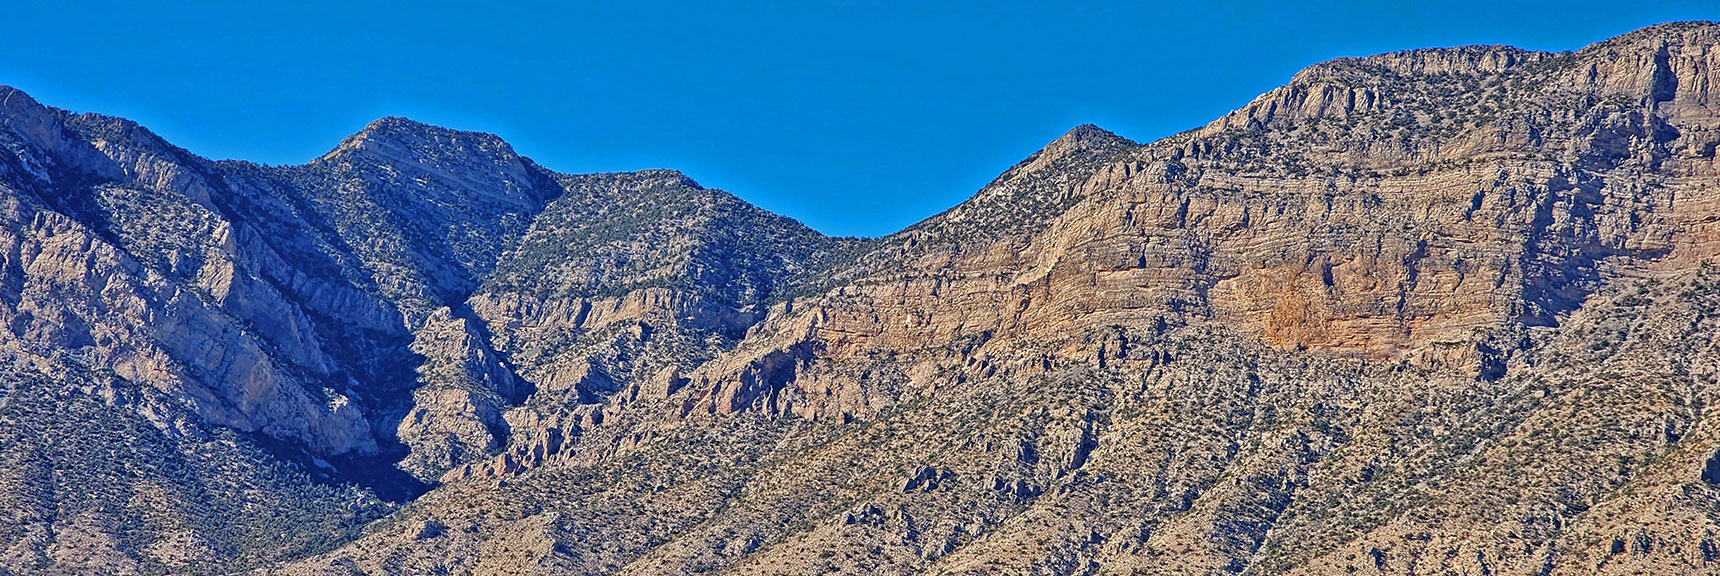 El Bastardo/Burnt Peak Saddle Area | Turtlehead Peak | Red Rock Canyon National Conservation Area, Nevada